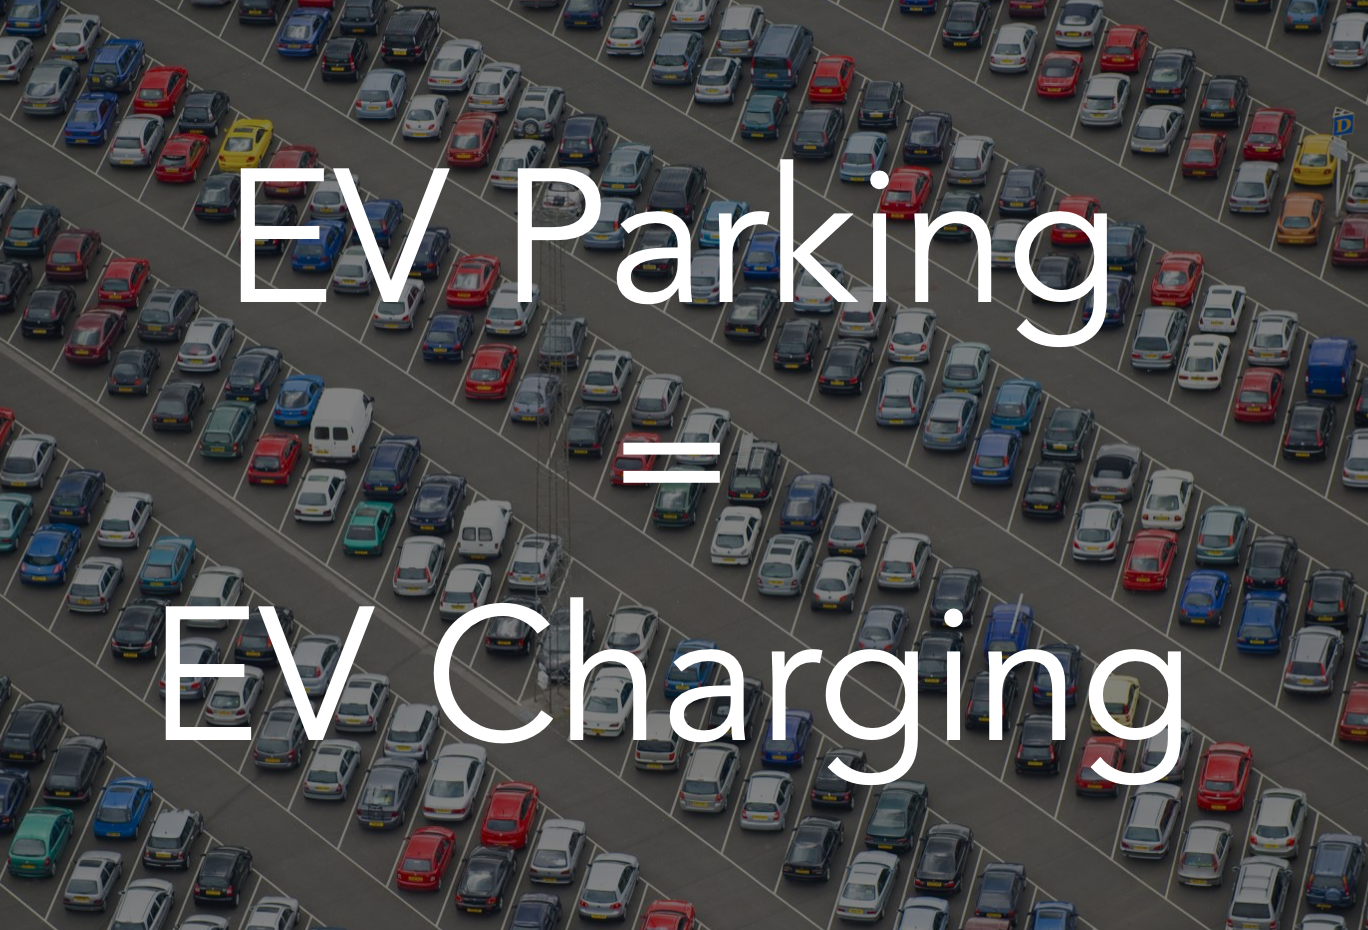 EV Parking = EV Charging